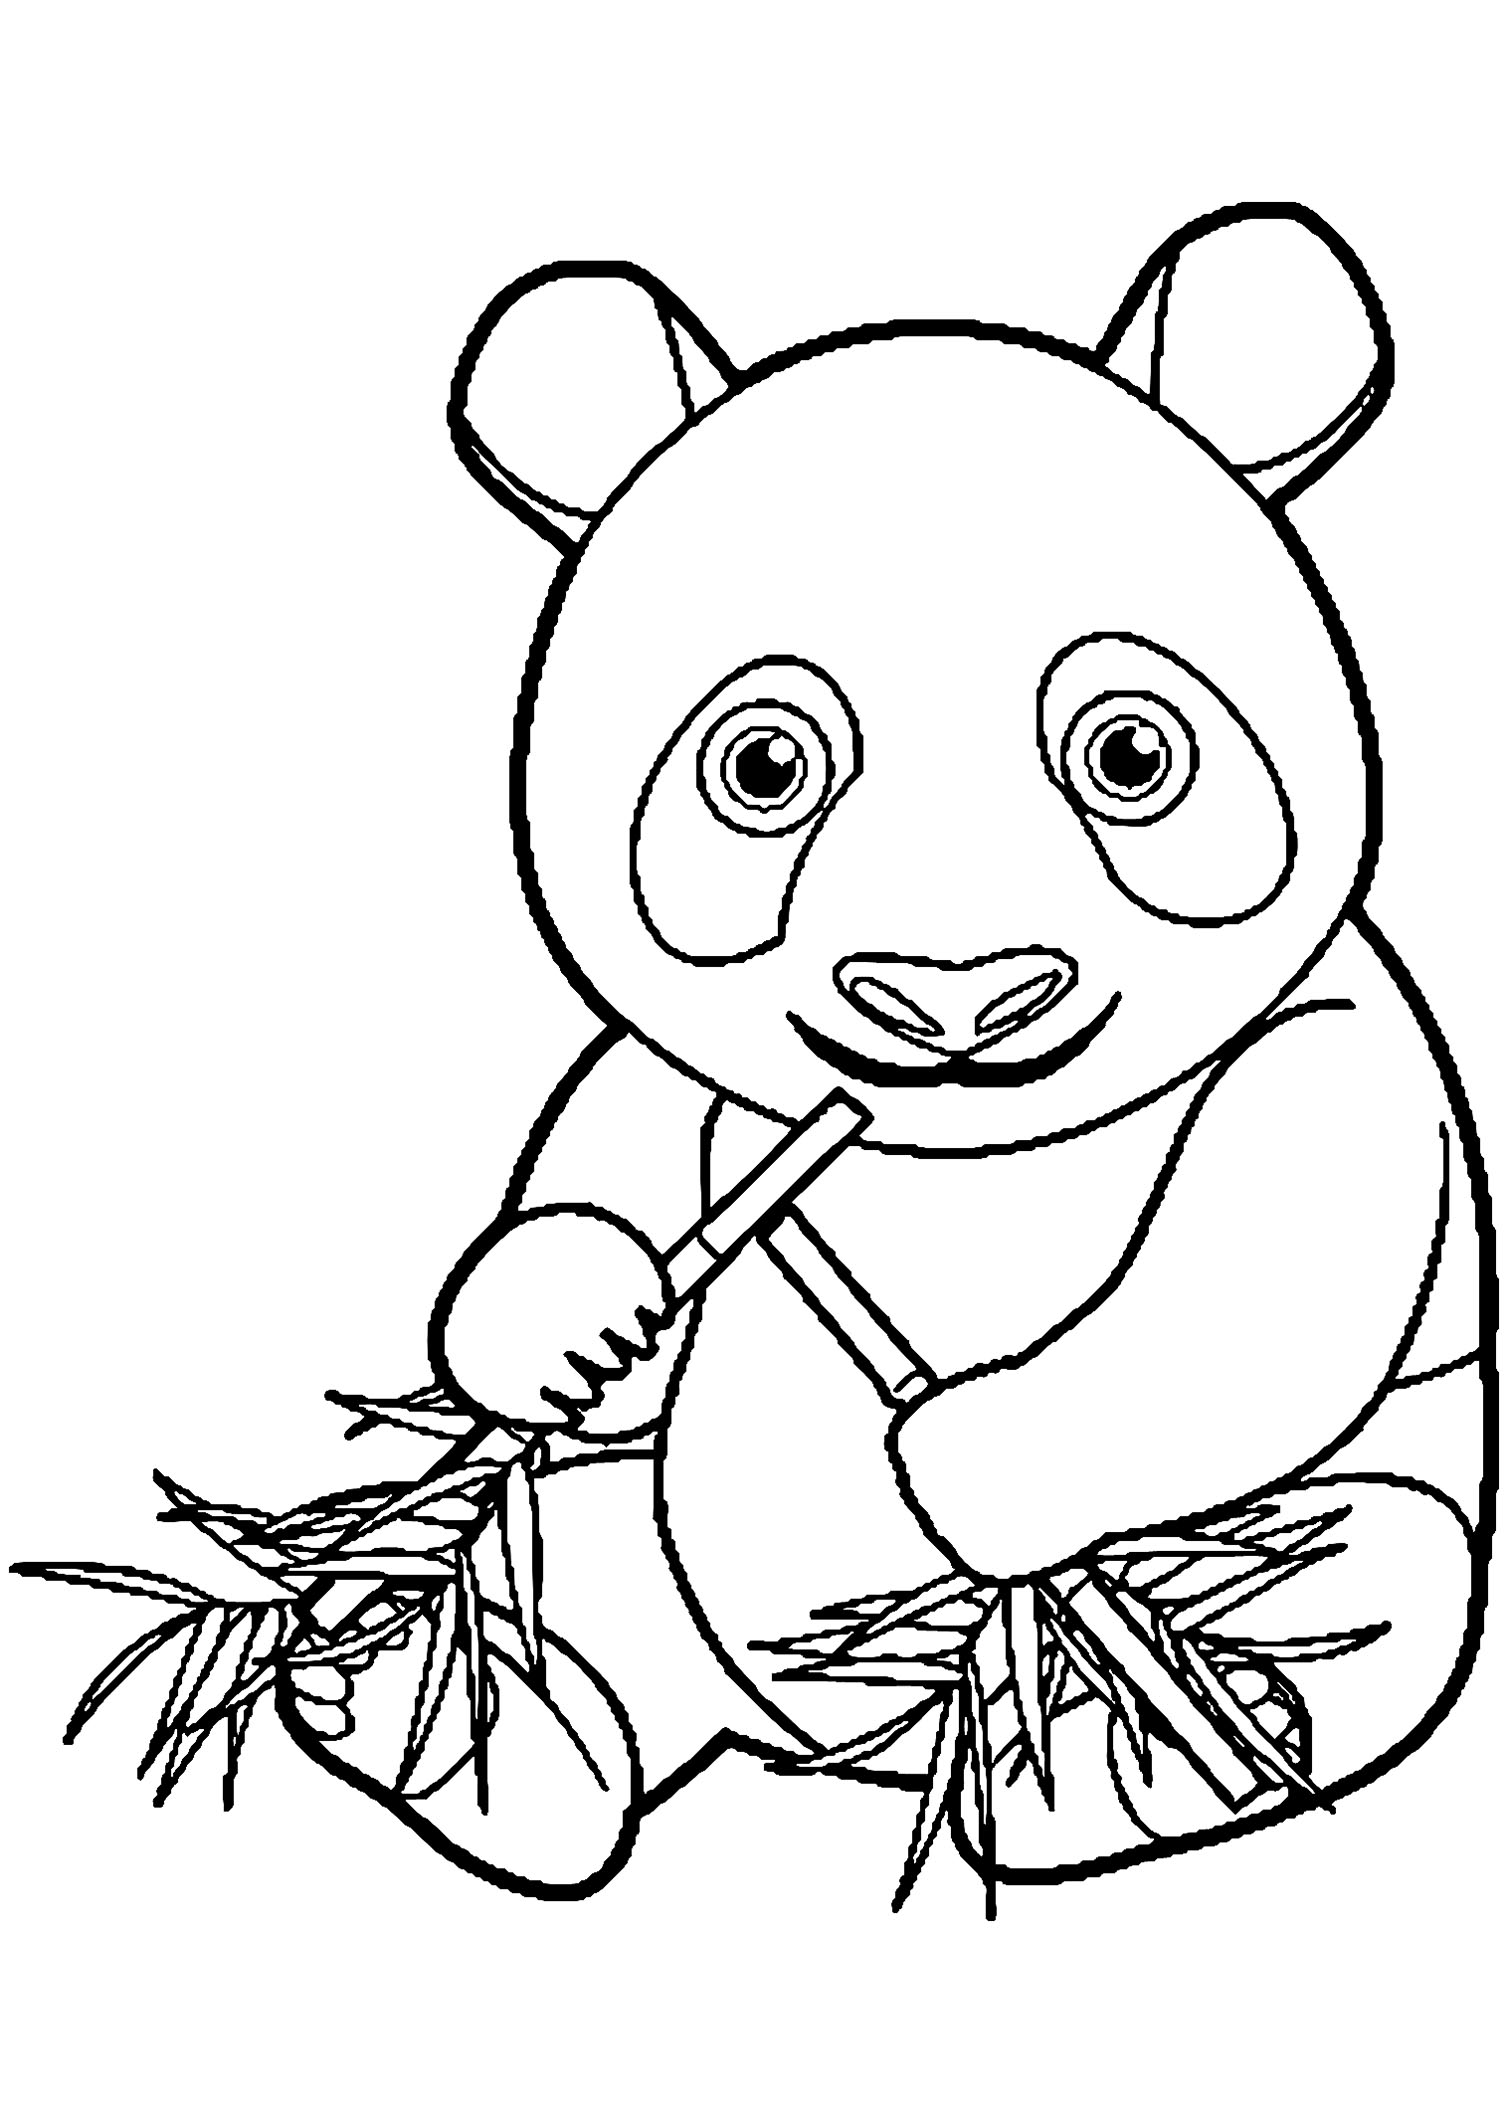 Download Pandas to print - Pandas Kids Coloring Pages